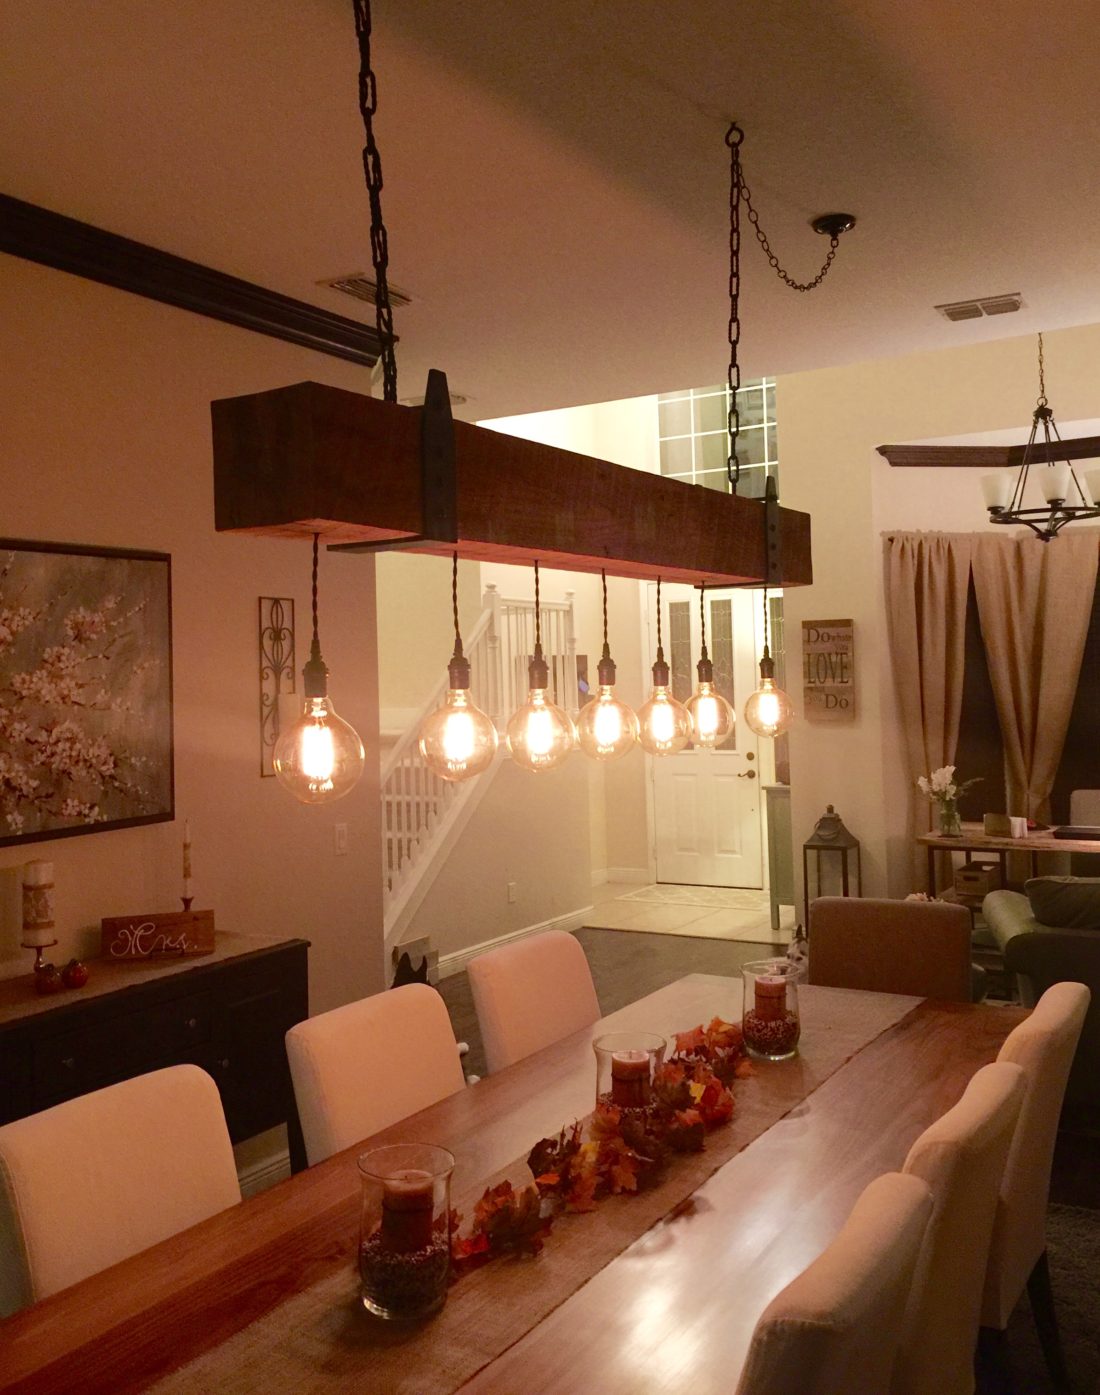 Barn wood chandelier with vintage bulbs